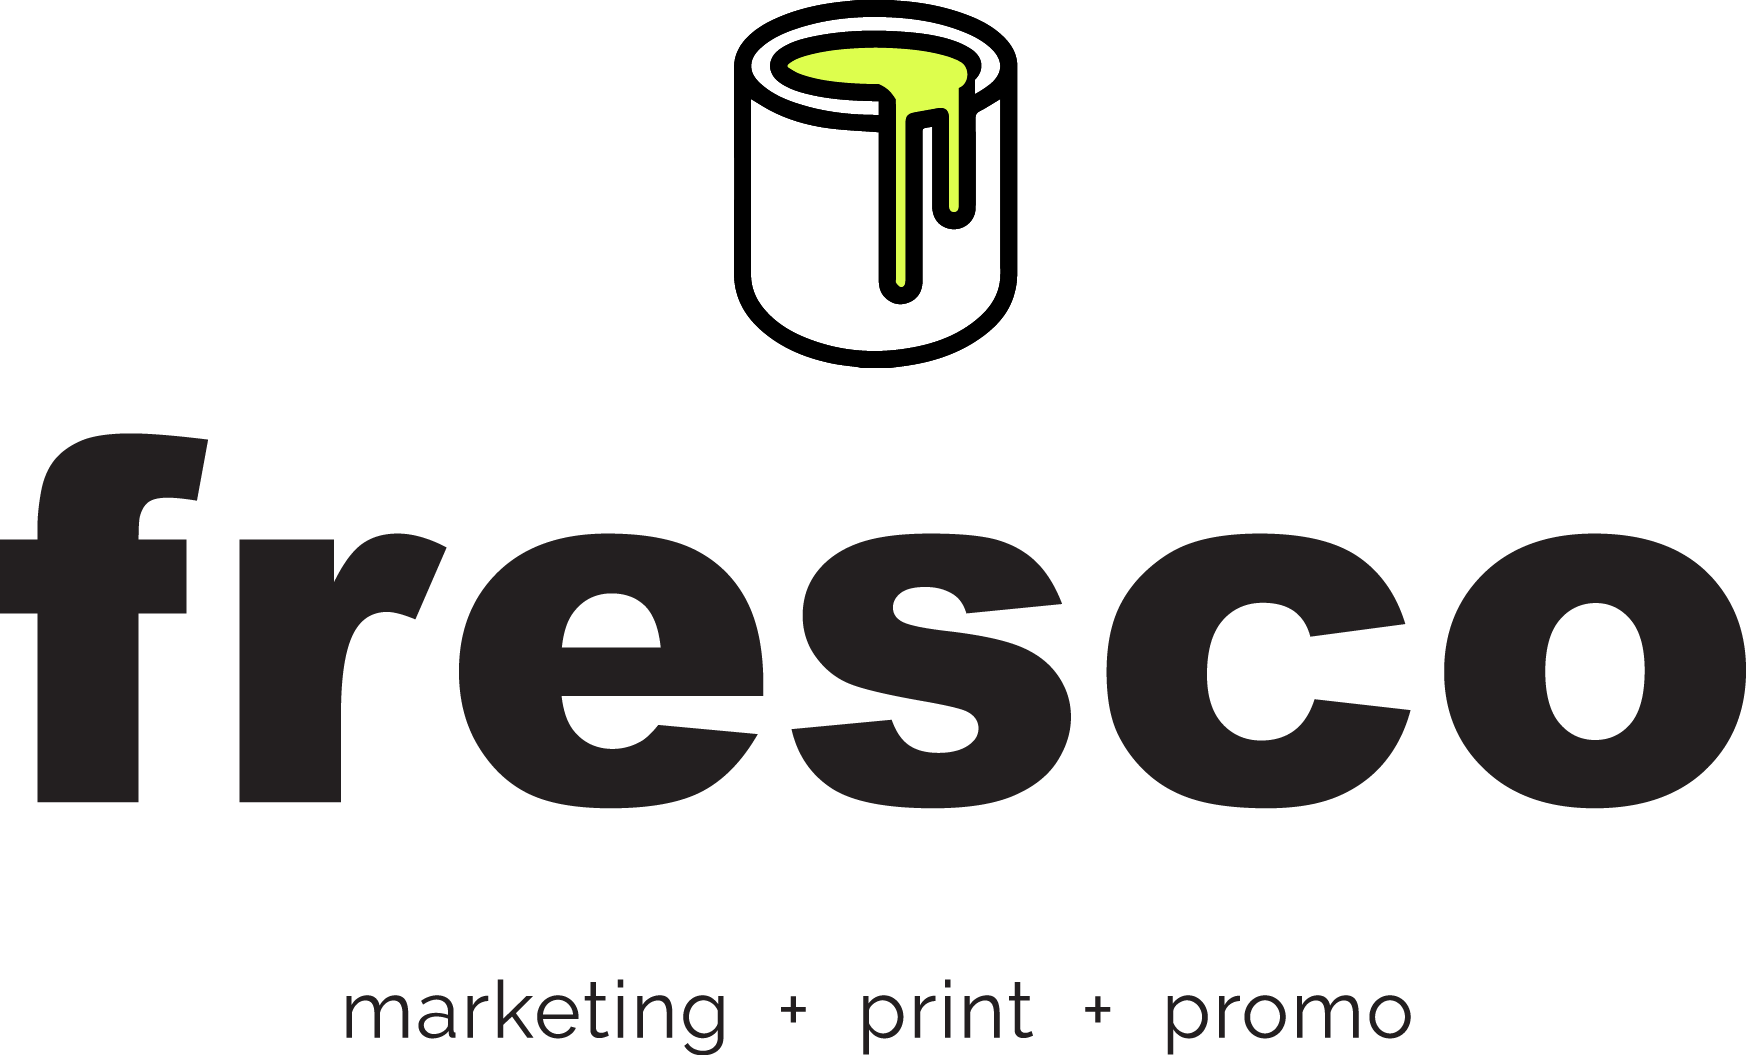 Fresco Logo - FRESCO PRESS